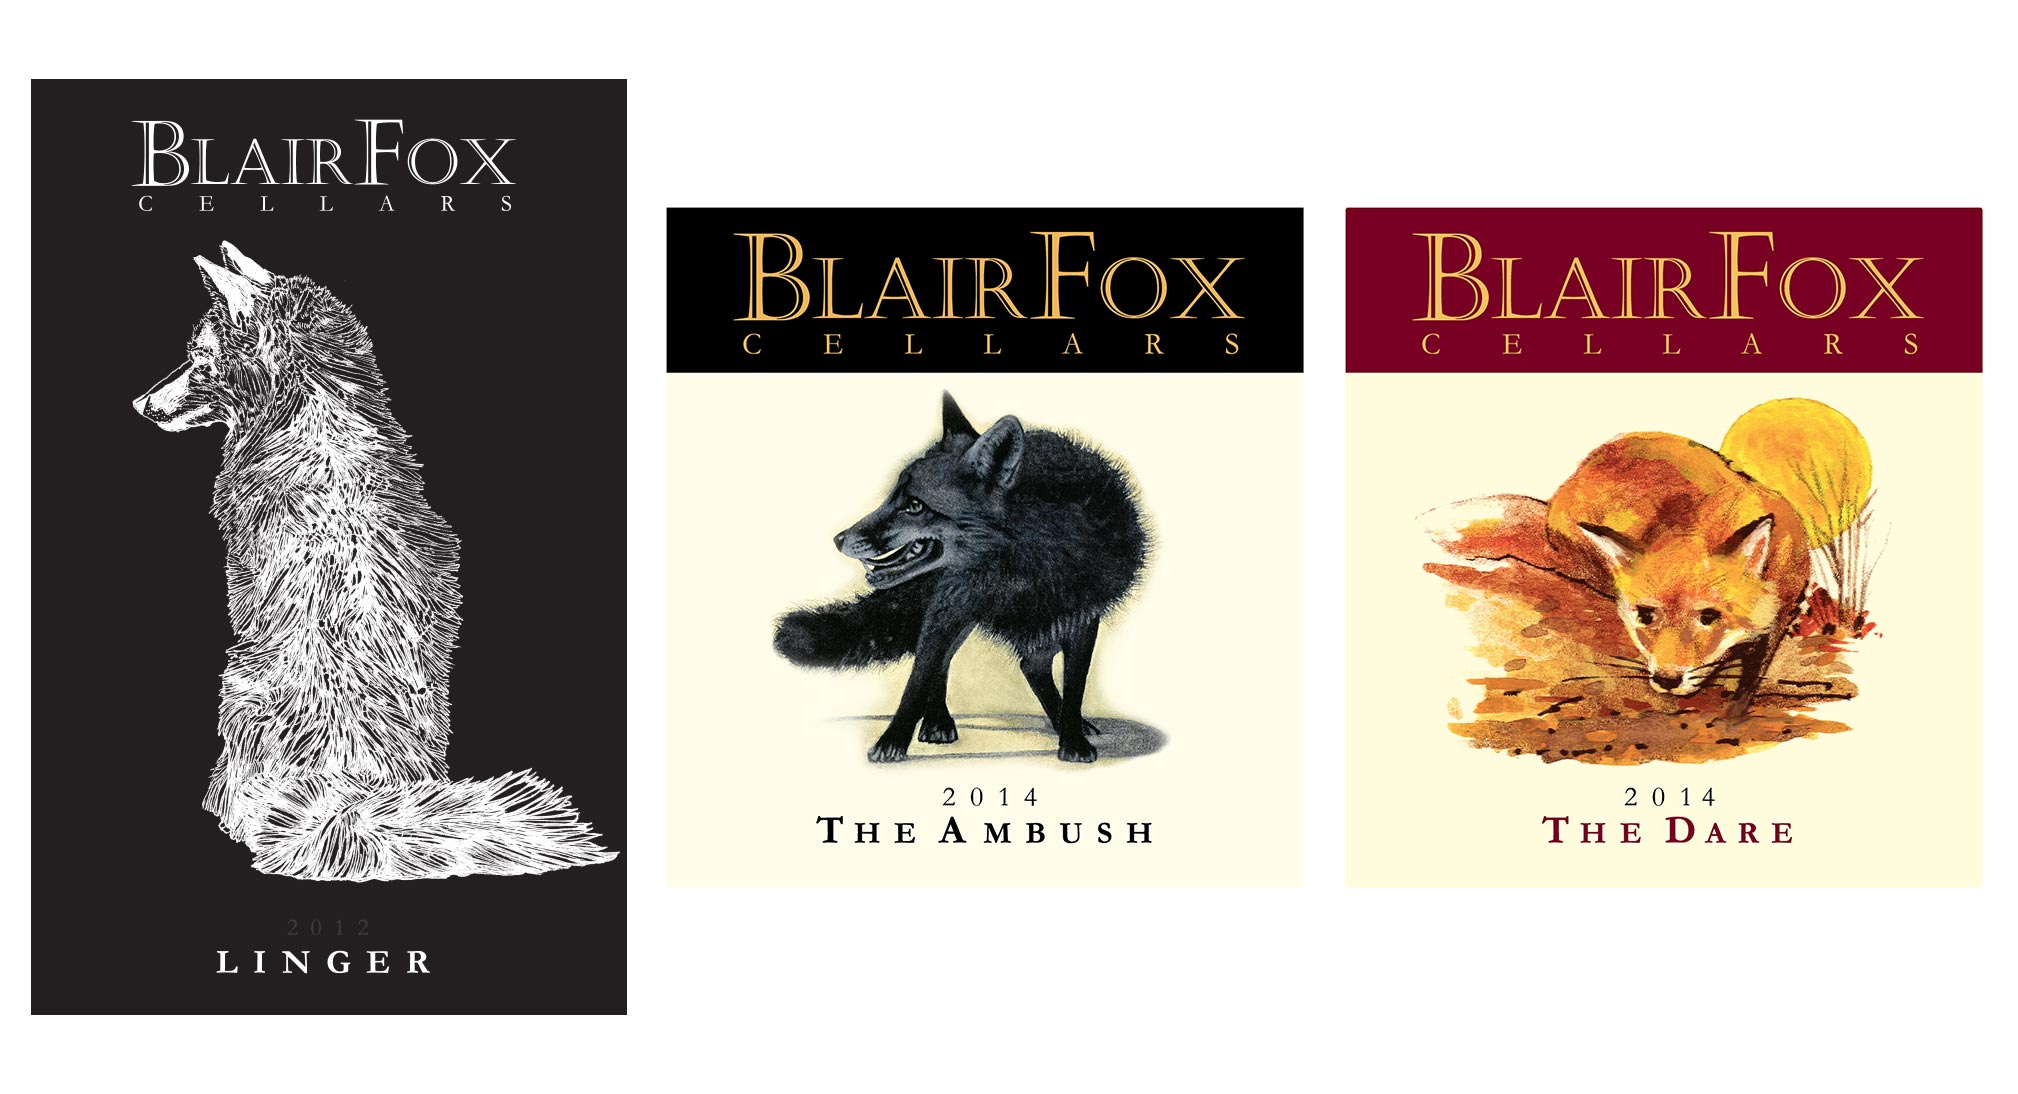 Blair Fox Cellars wine label designs classics